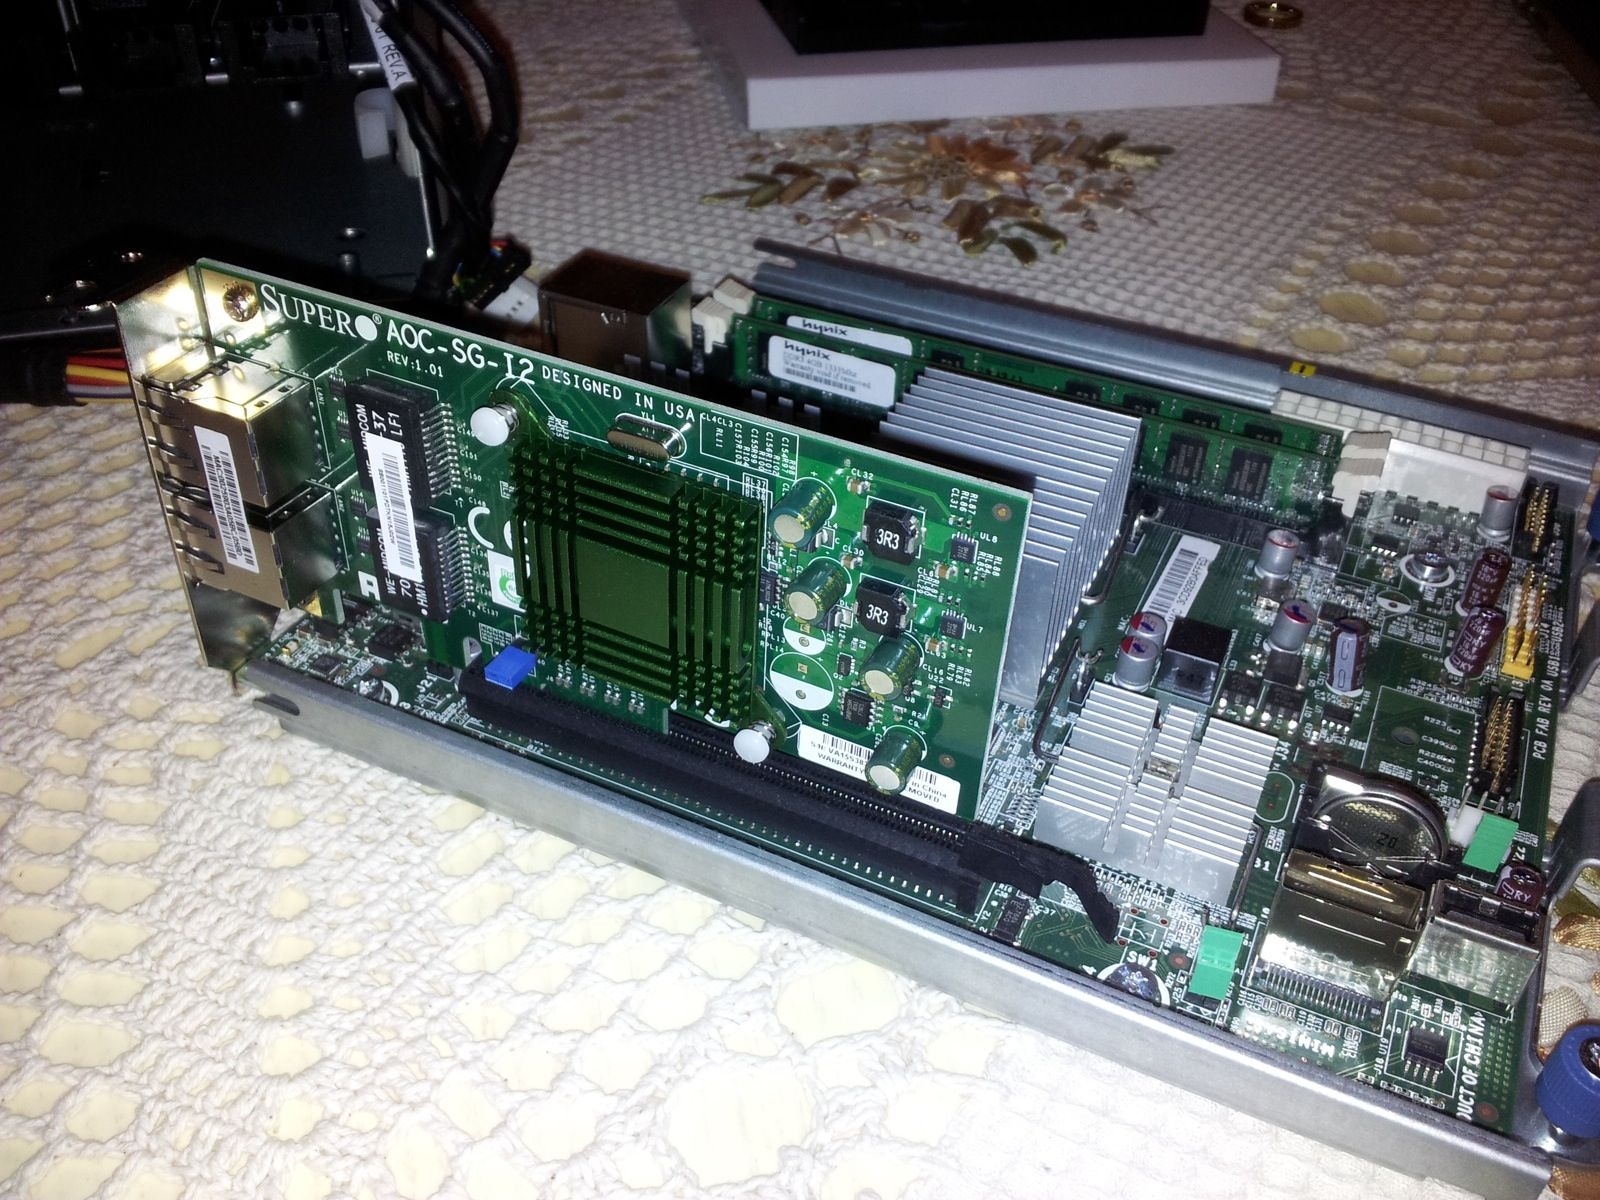 HP ProLiant MicroServer N40L with Supermicro AOC-SG-i2 Dual Gigabit i82575EB